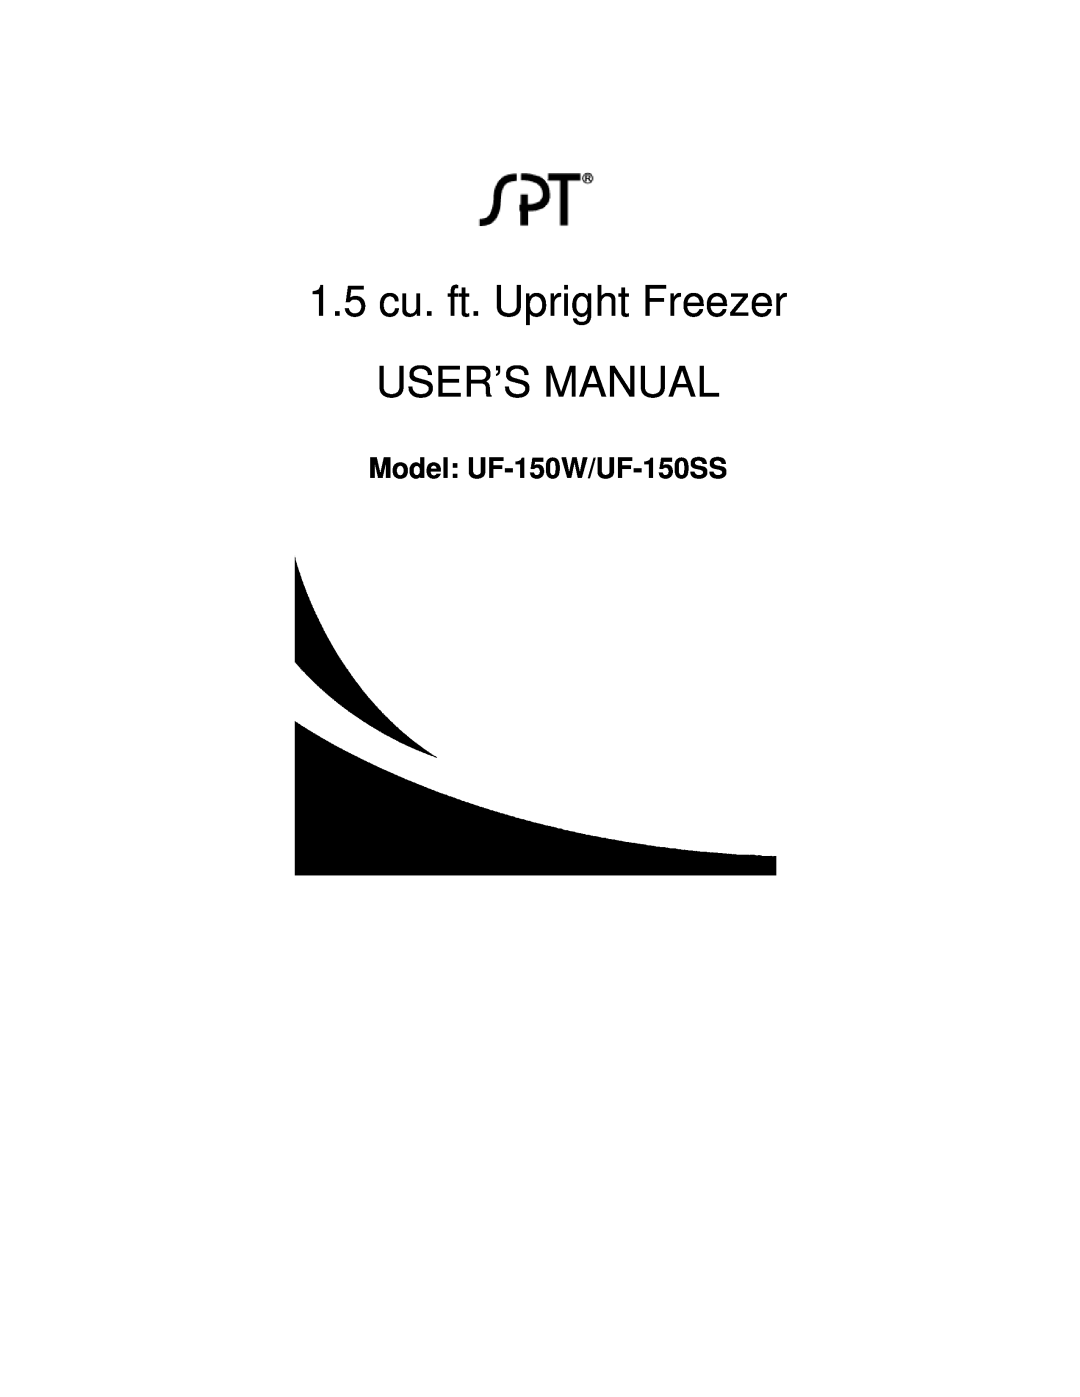 Sunpentown Intl user manual 1.5 cu. ft. Upright Freezer, Model UF-150W/UF-150SS 